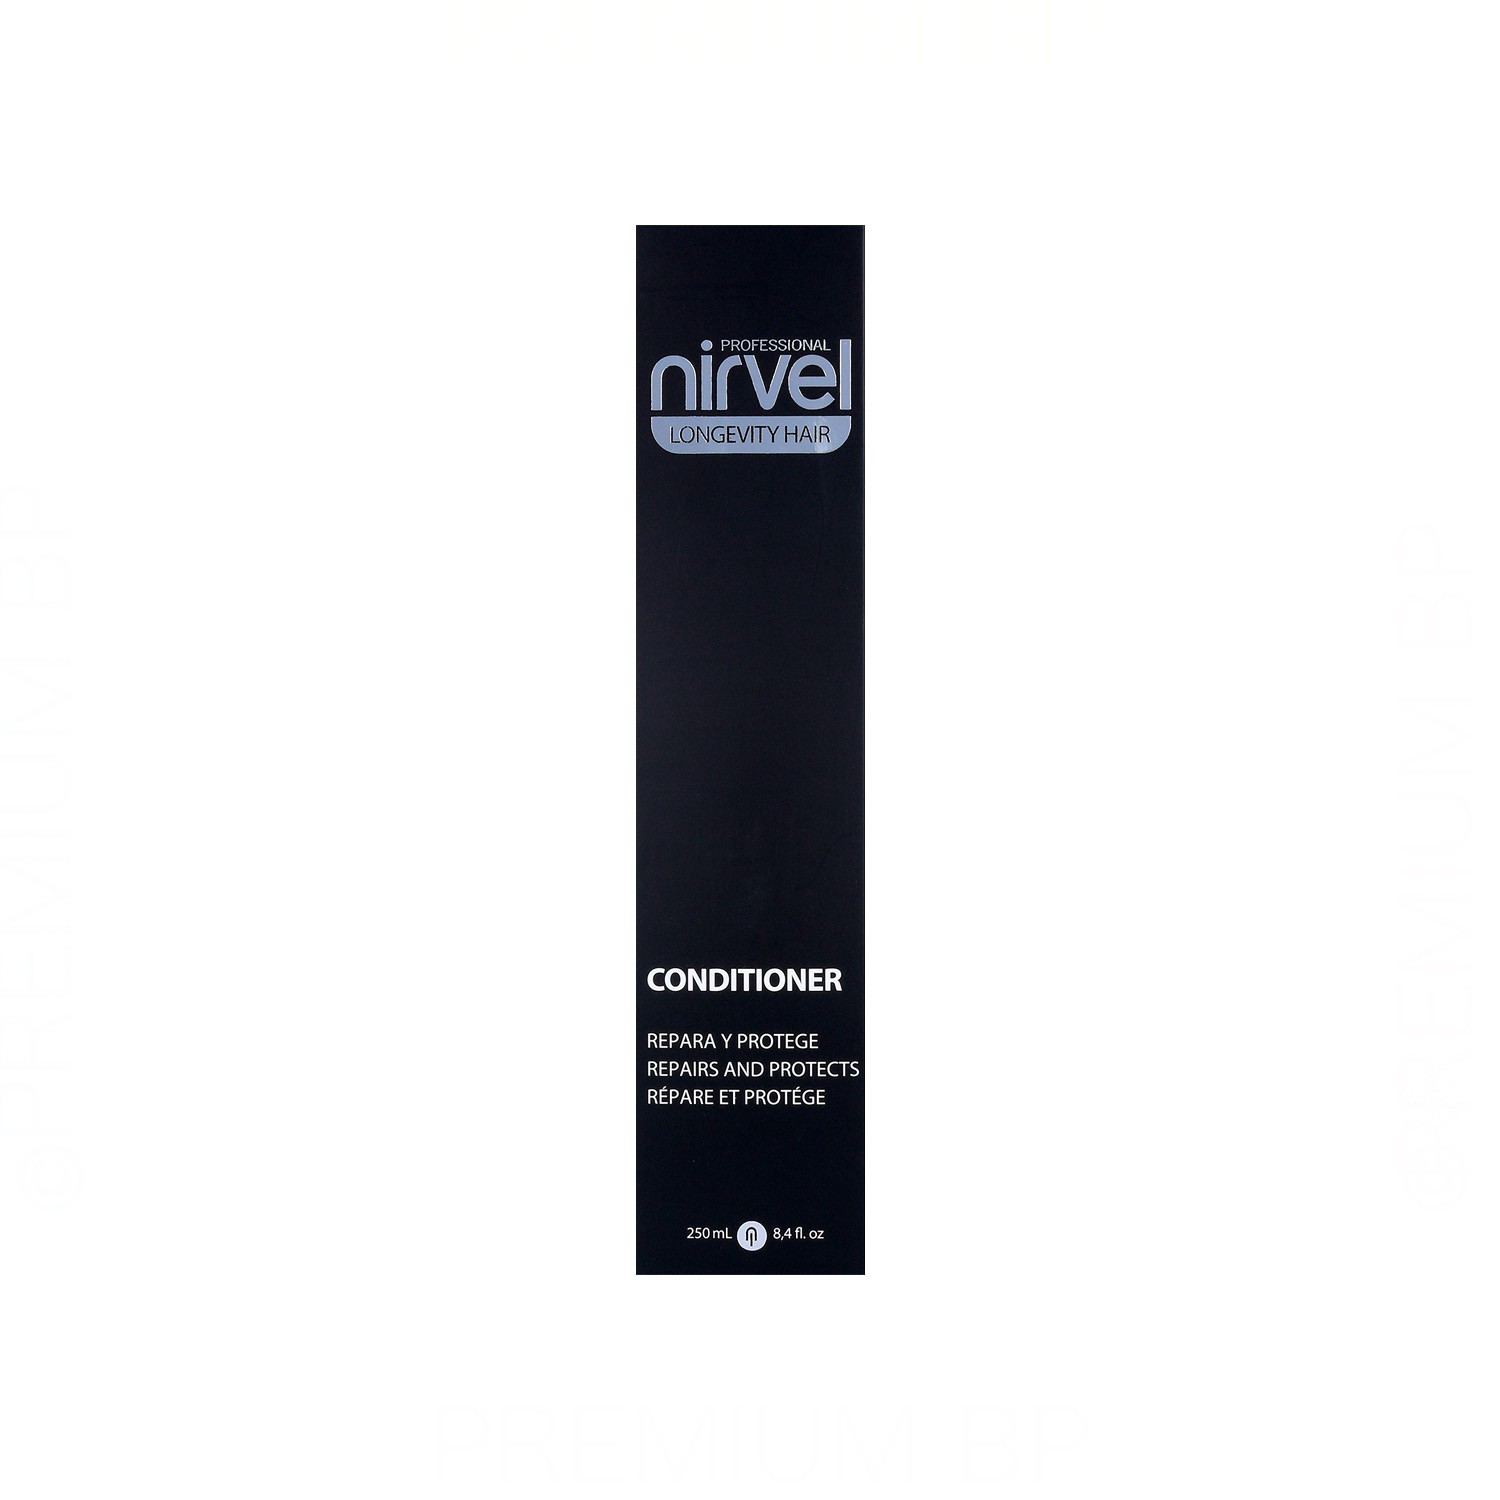 Nirvel Longevity Hair Condizionatore 250 ml